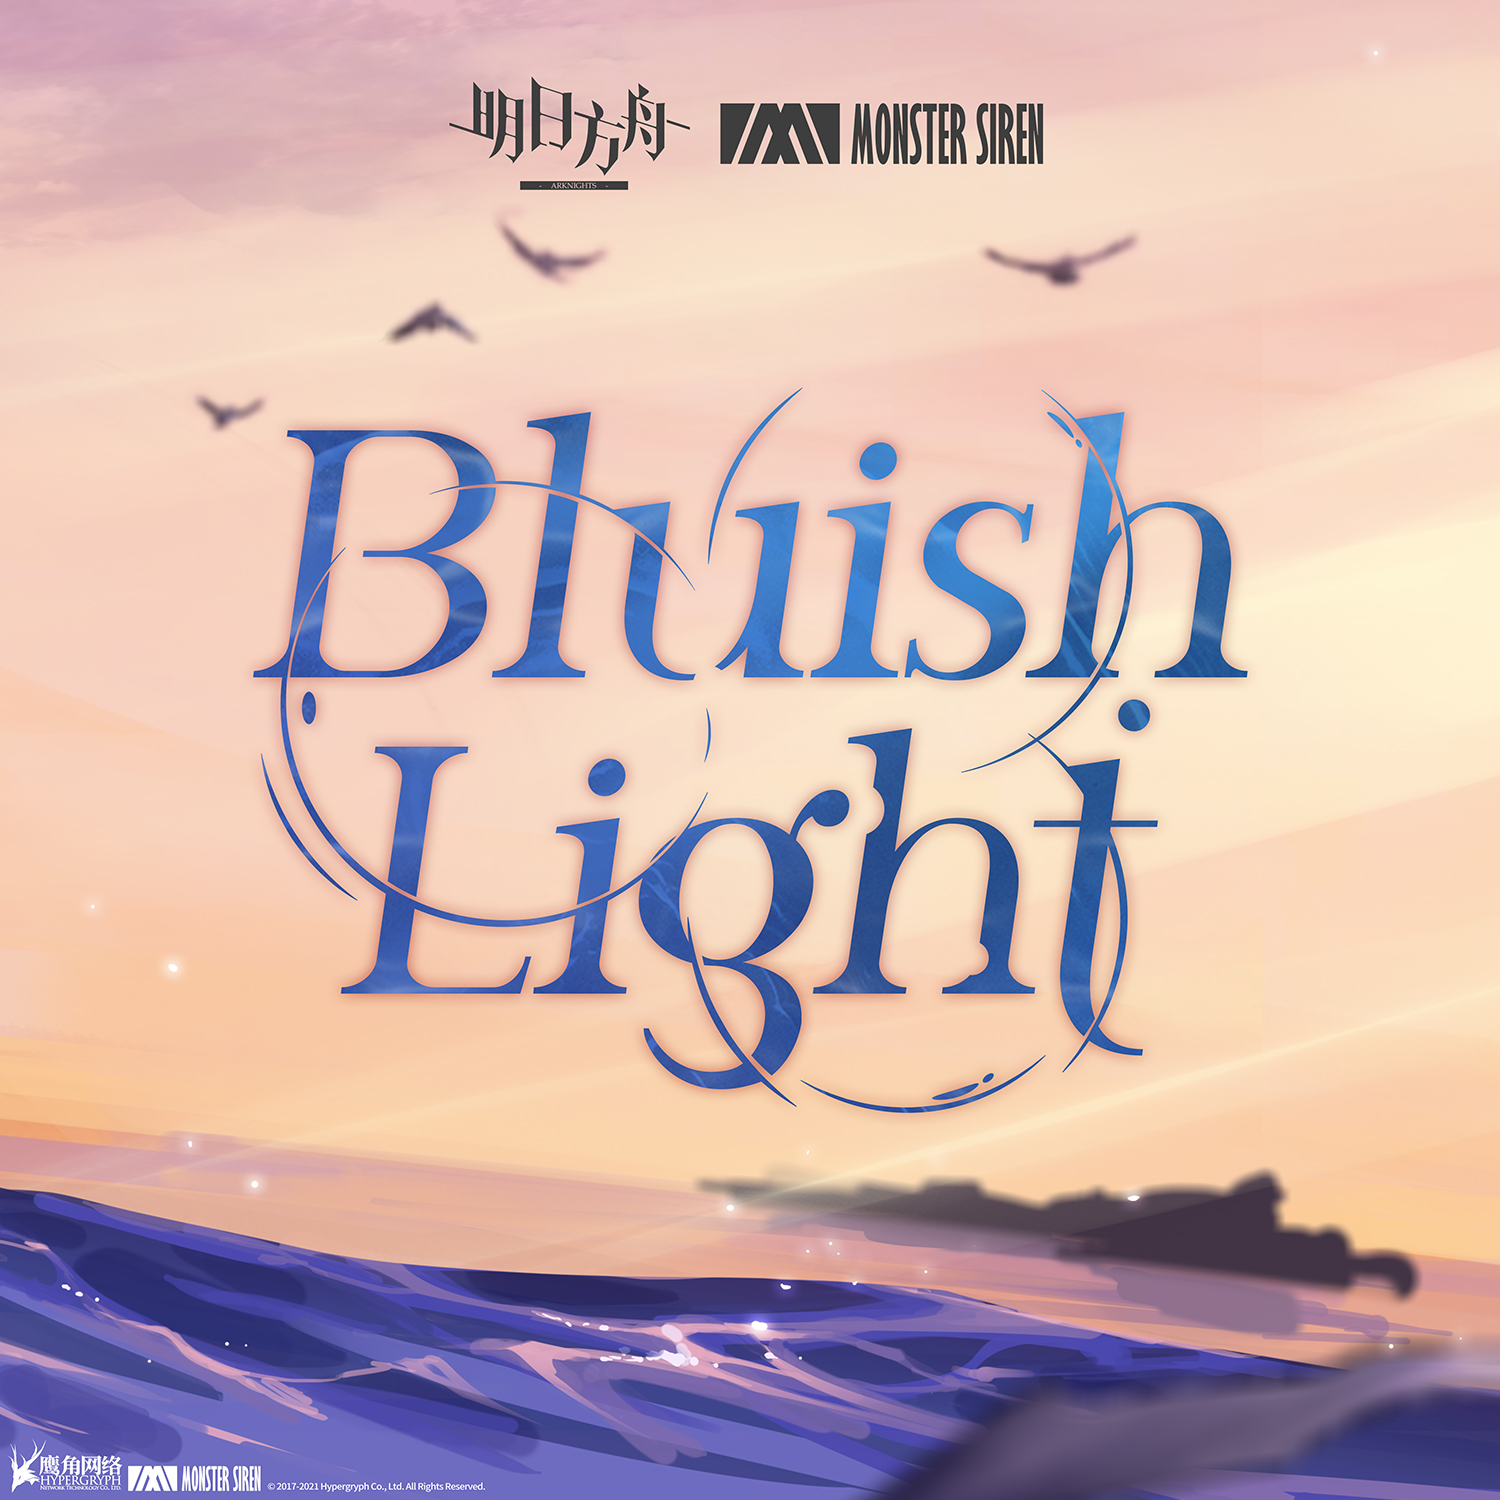 Bluish Light